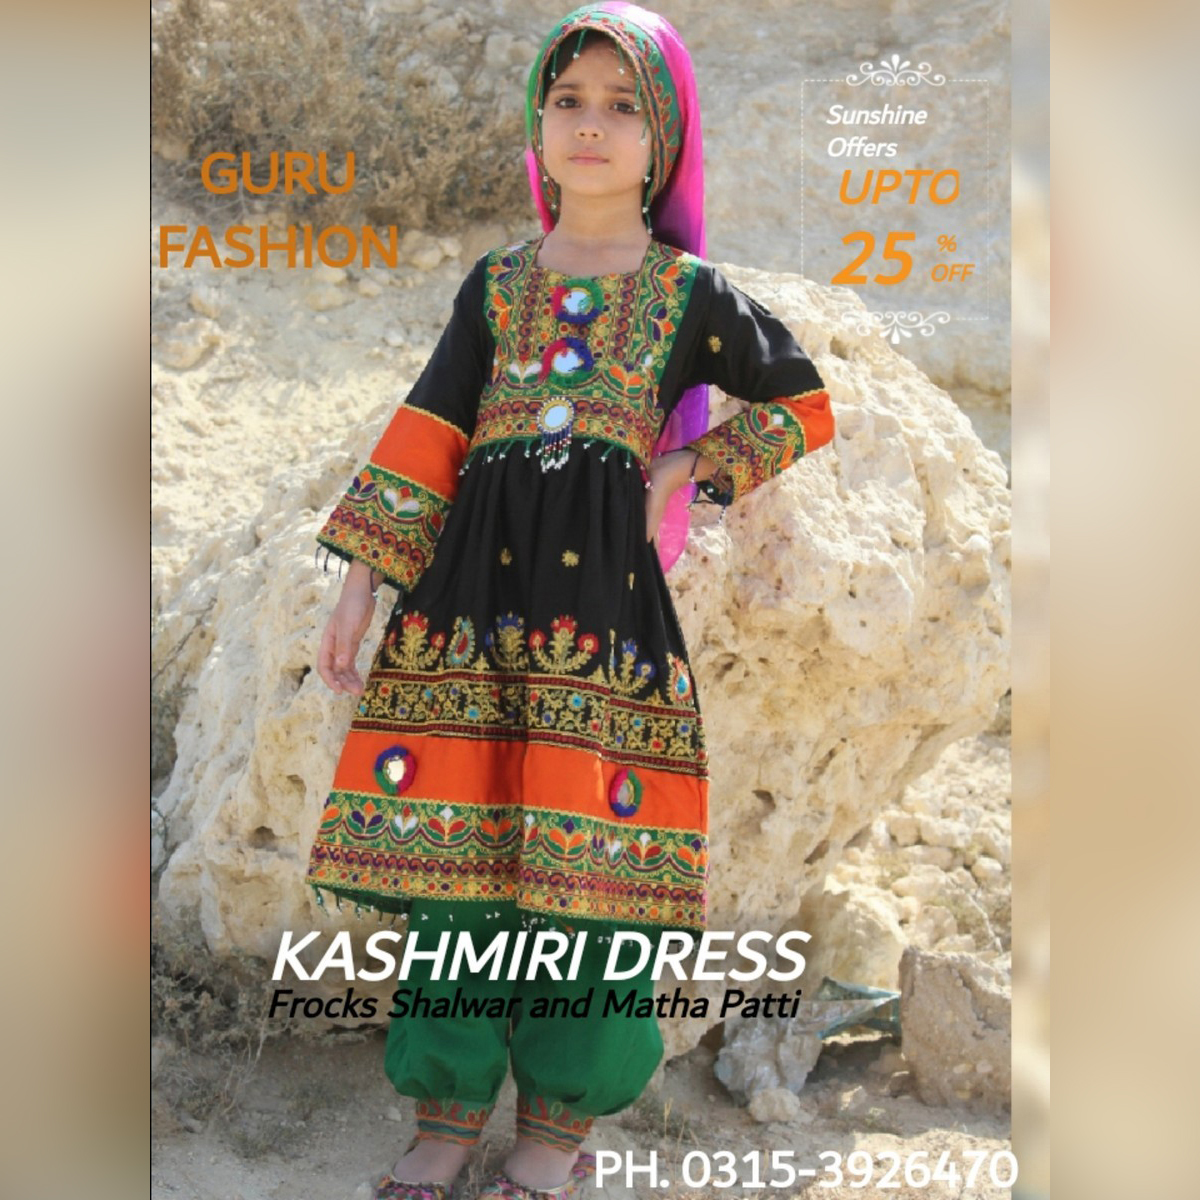 File:Girl in Kashmiri traditional dress.jpg - Wikimedia Commons